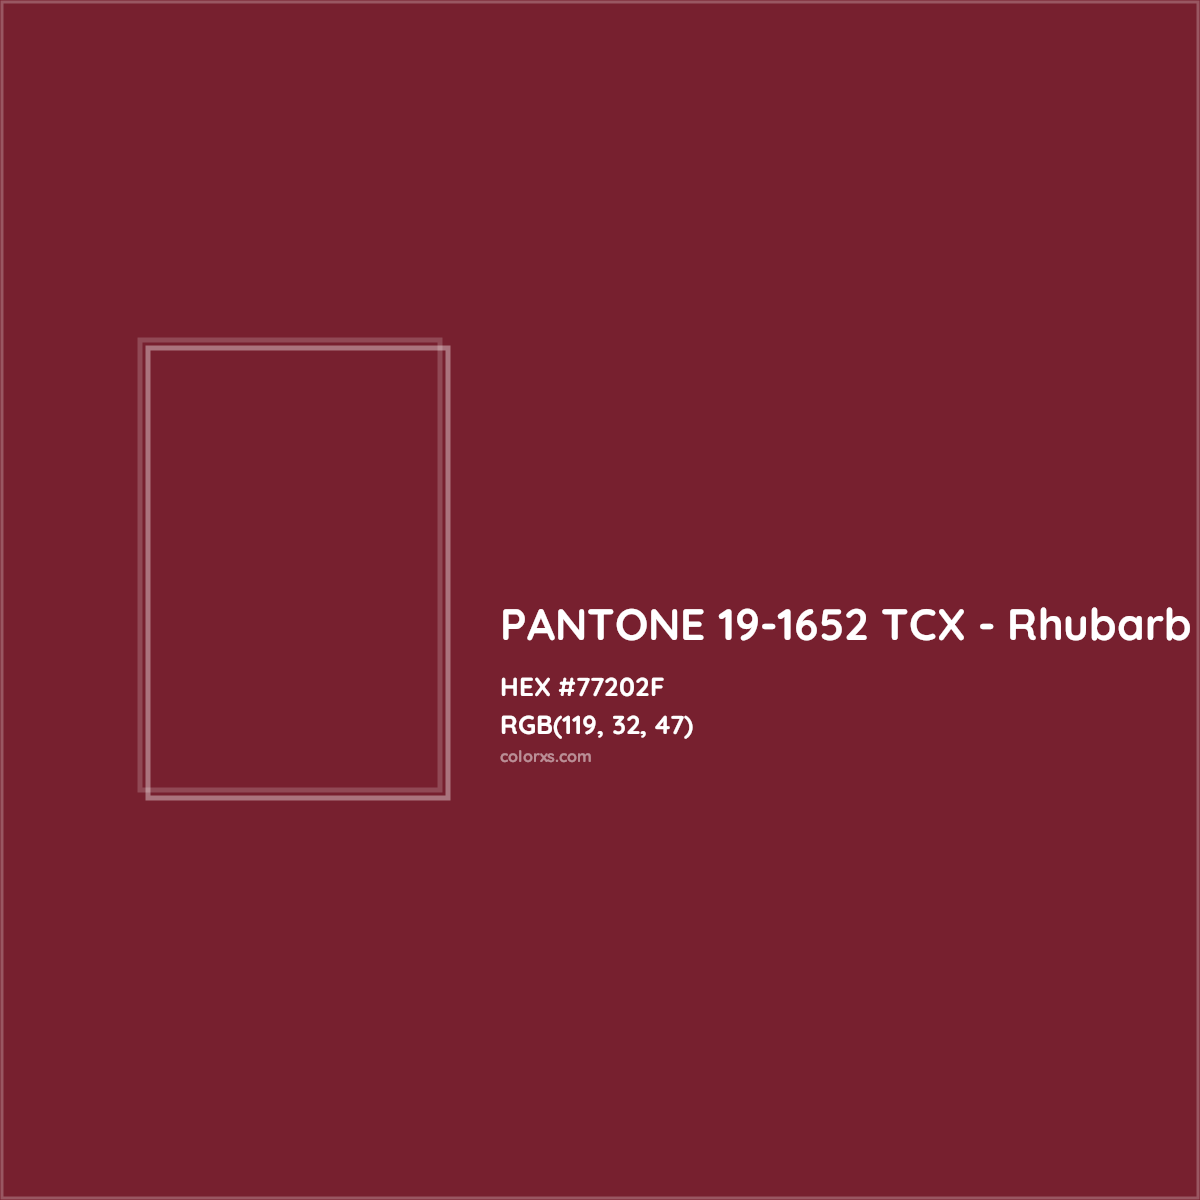 HEX #77202F PANTONE 19-1652 TCX - Rhubarb CMS Pantone TCX - Color Code